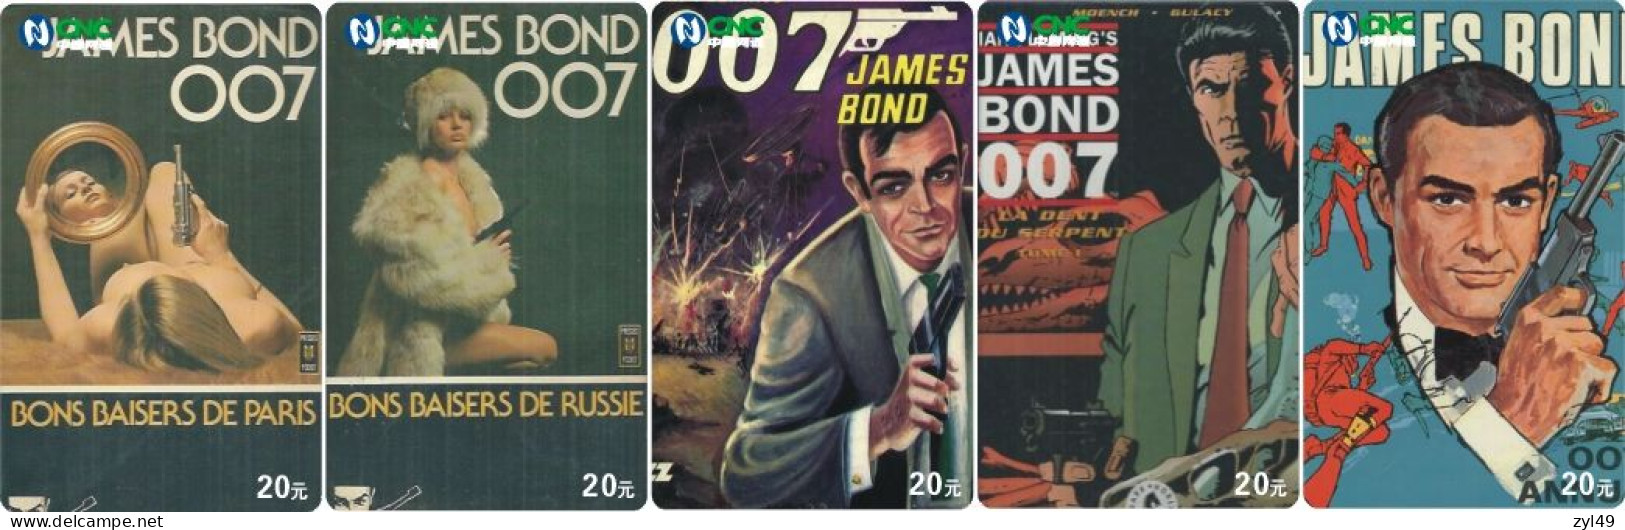 M13016 China phone cards James Bond 007 141pcs